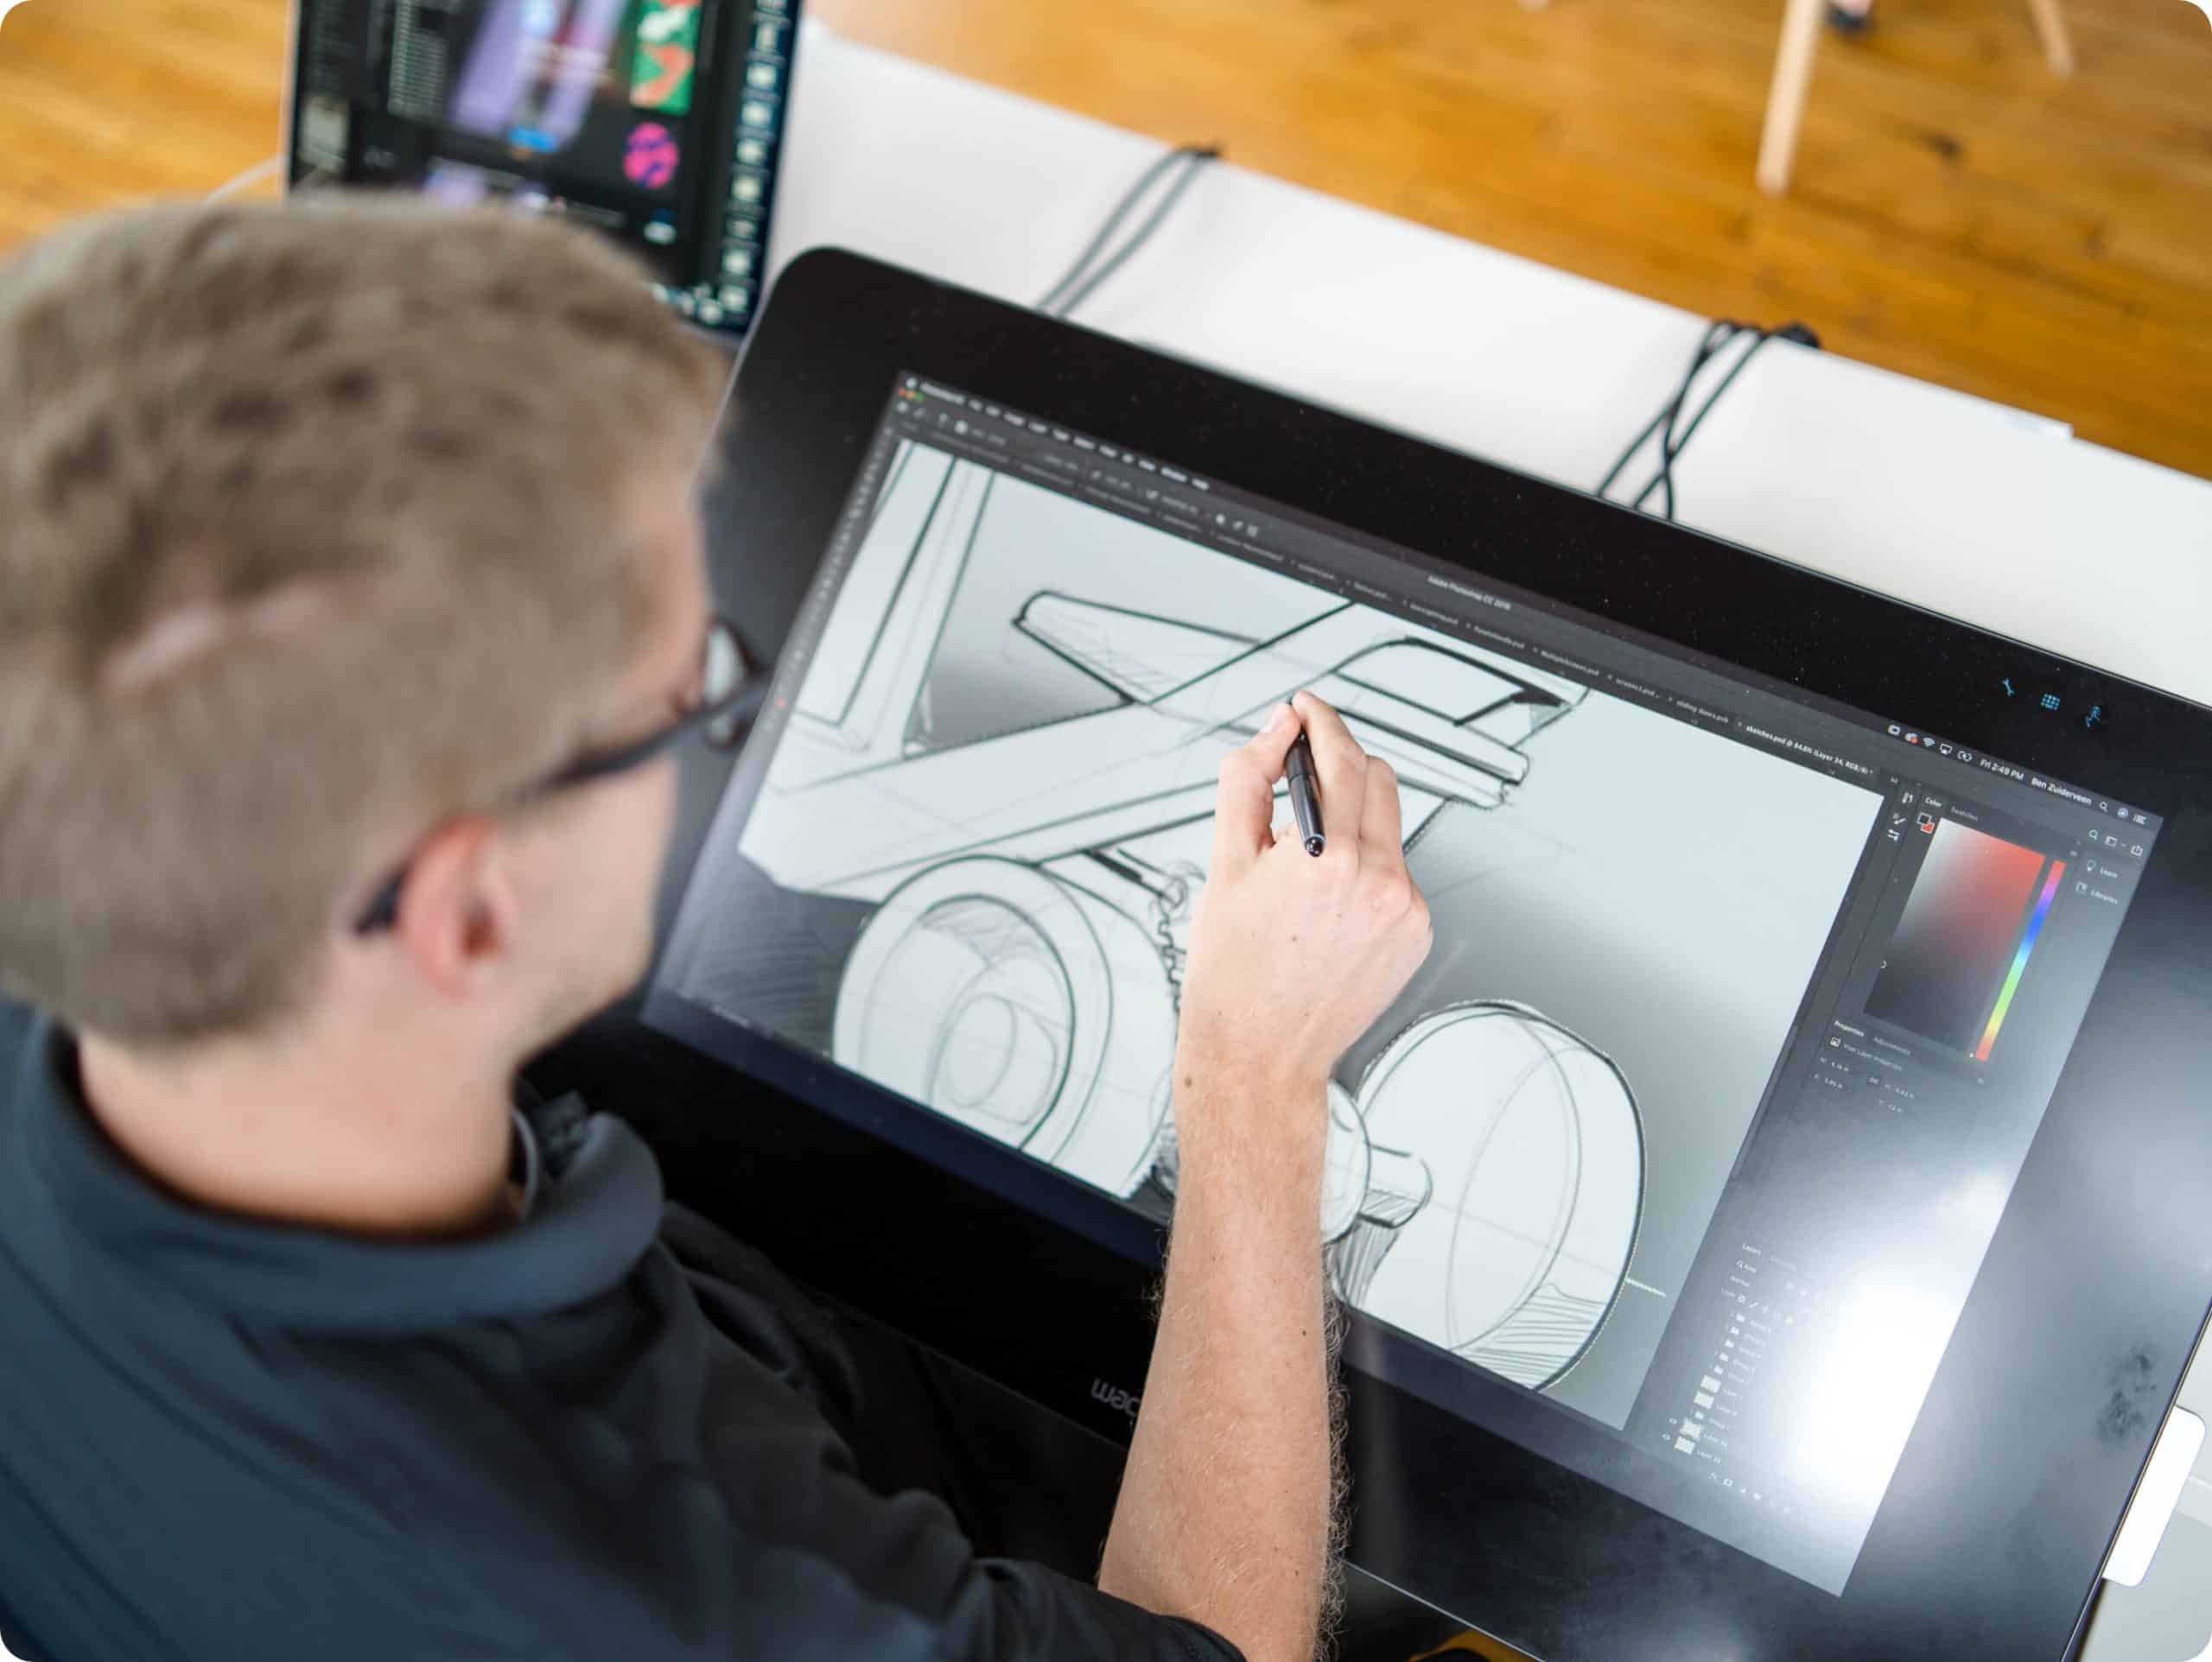 An industrial designer sketching on a digital tablet